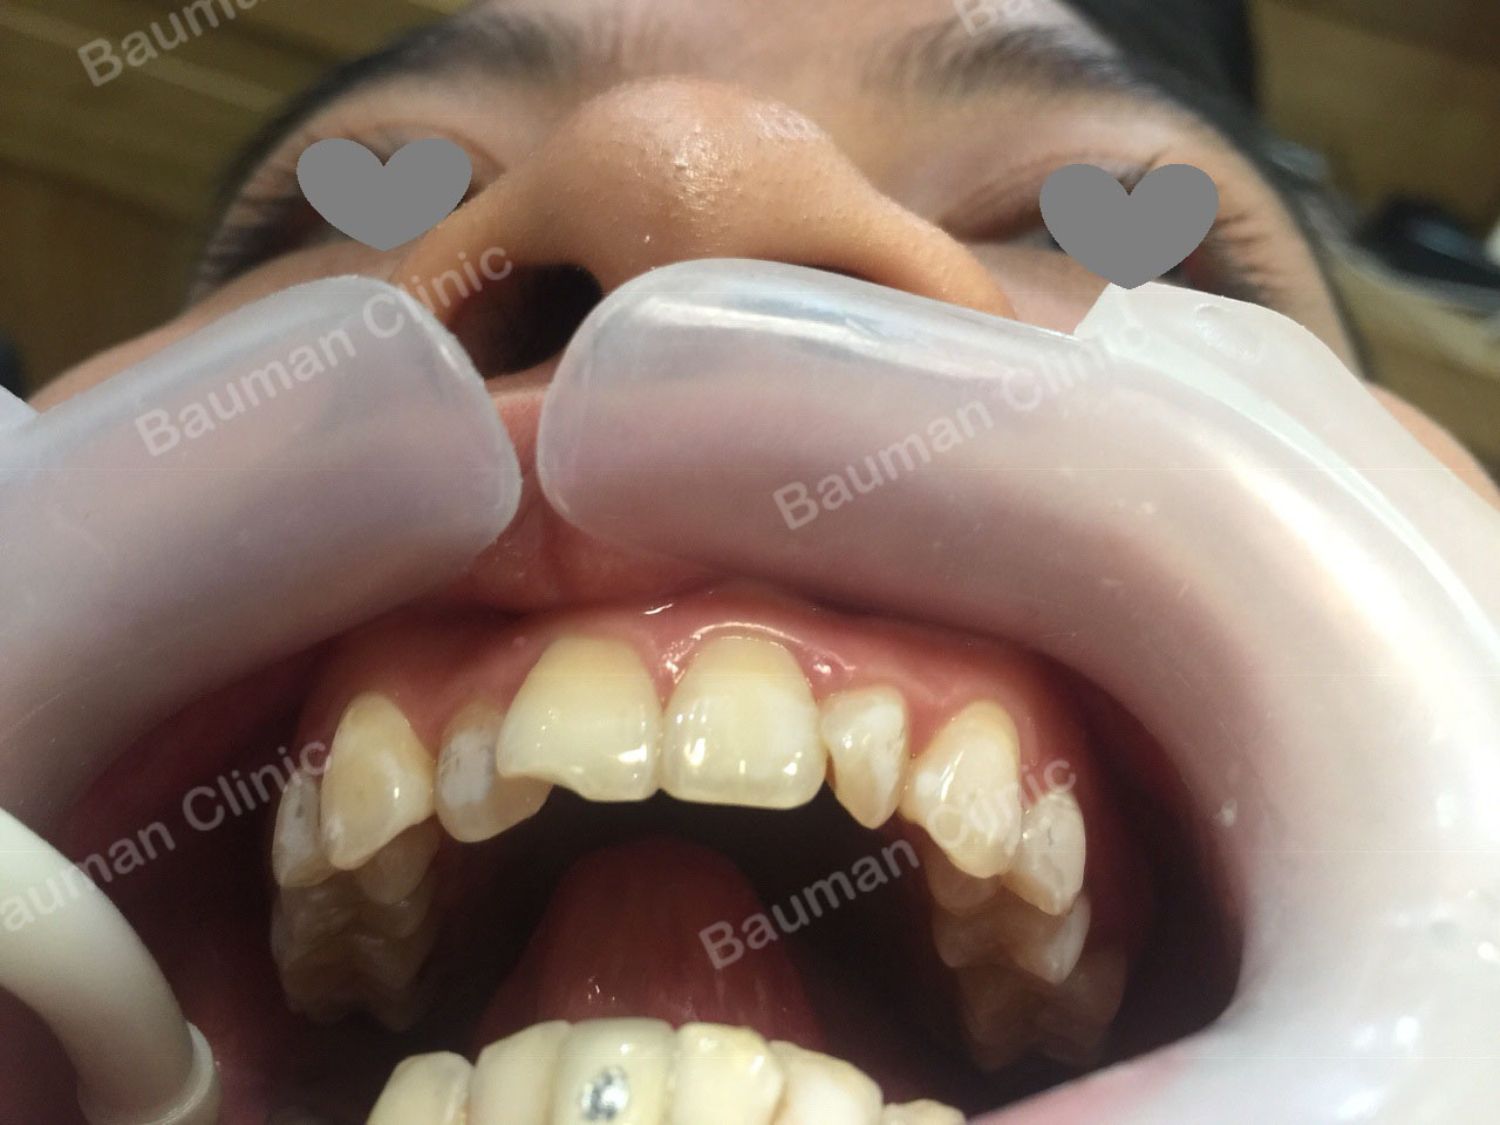 Ca niềng răng số 5071 - Nha khoa Bauman Clinic